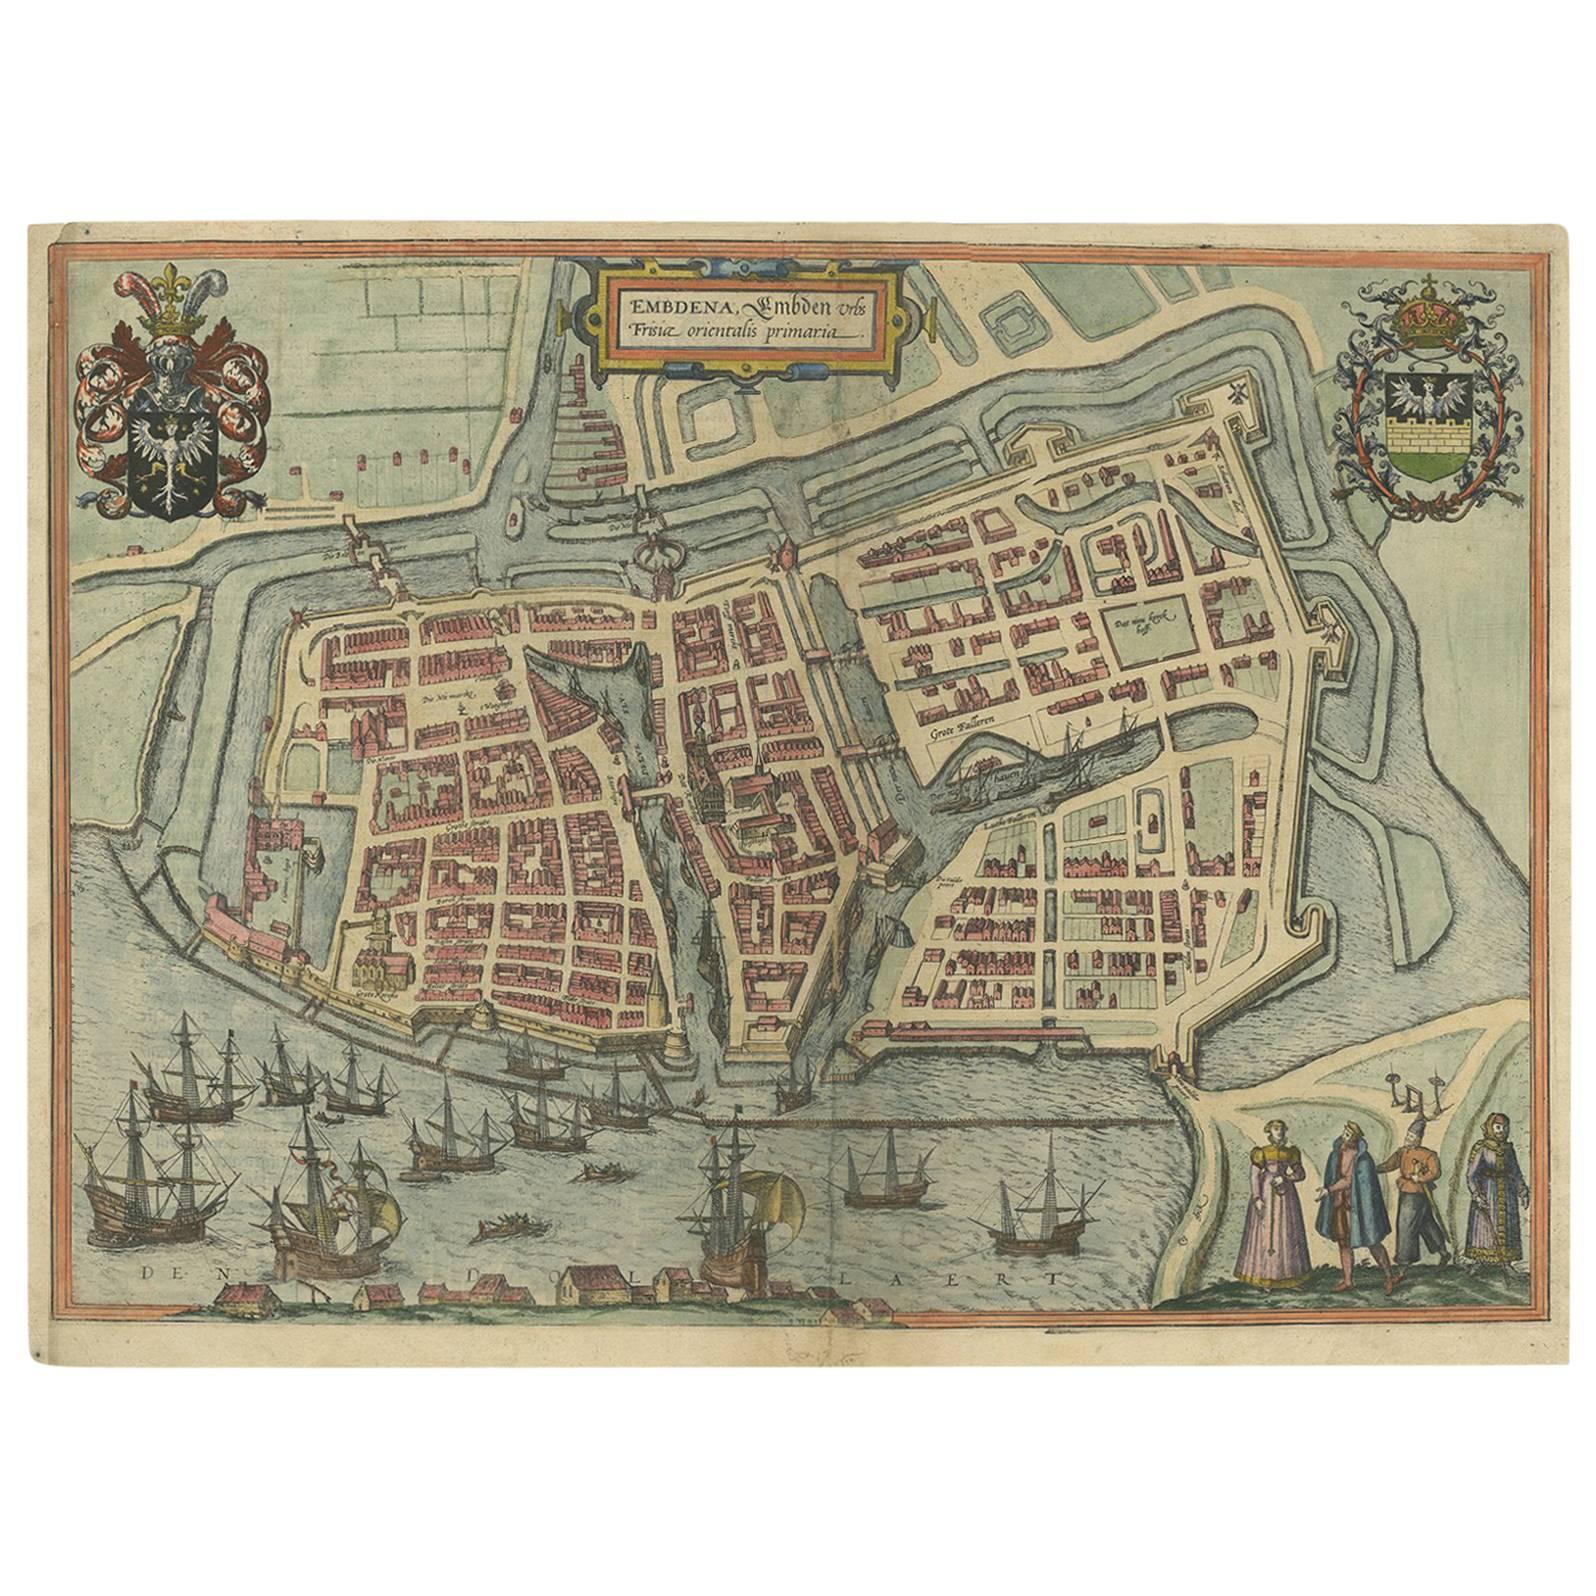 Antique Town Plan of Emden ‘Germany’ by Braun & Hogenberg, 1597